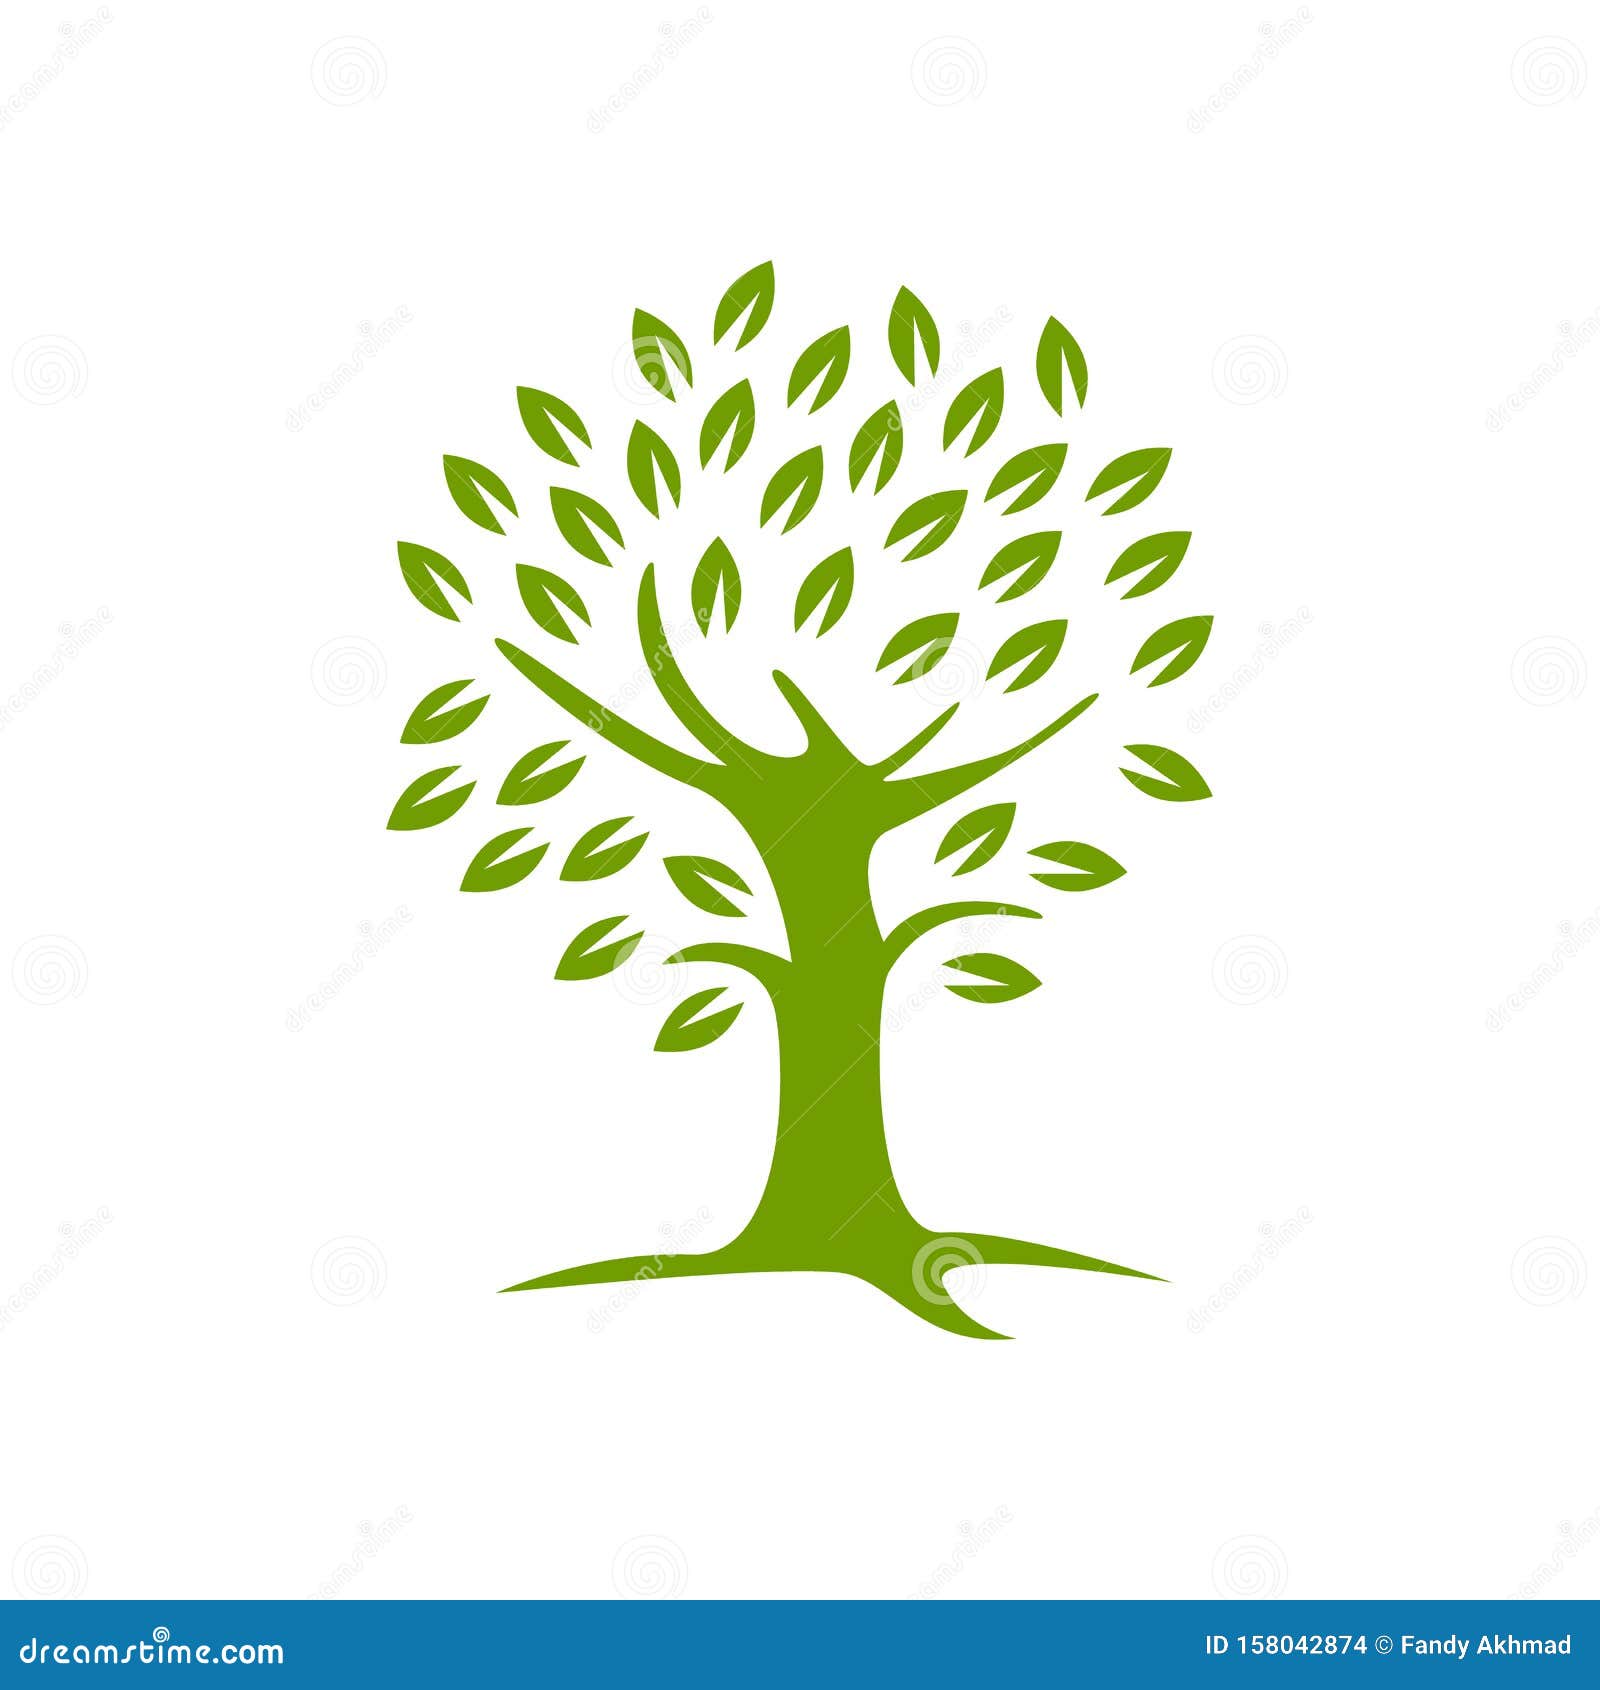 Simple Tree Vector Art & Graphics | freevector.com